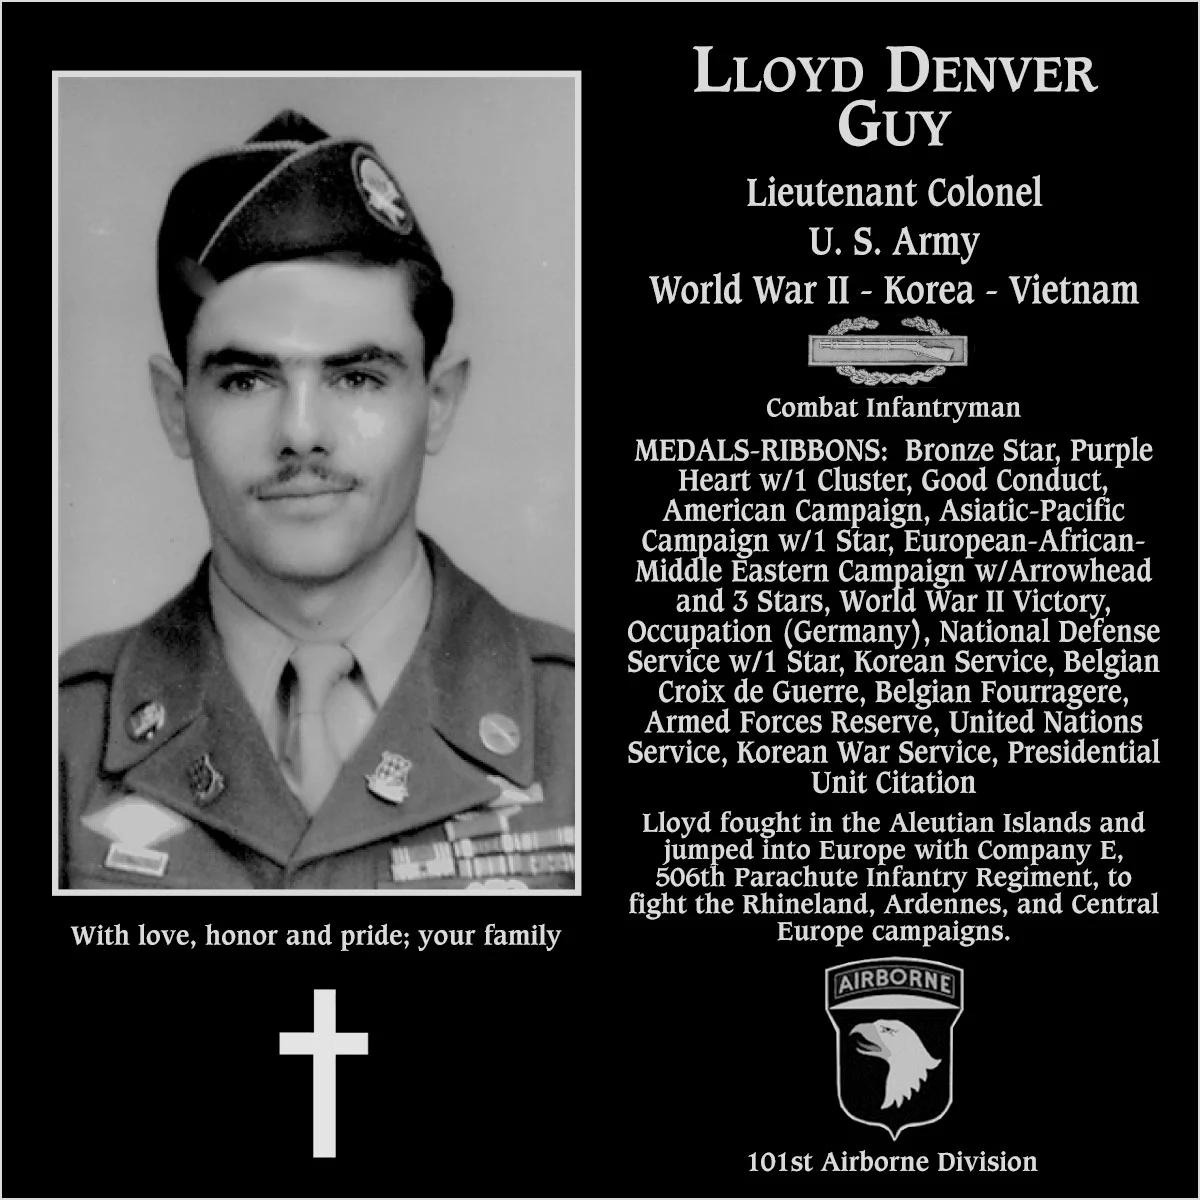 Lloyd Denver Guy